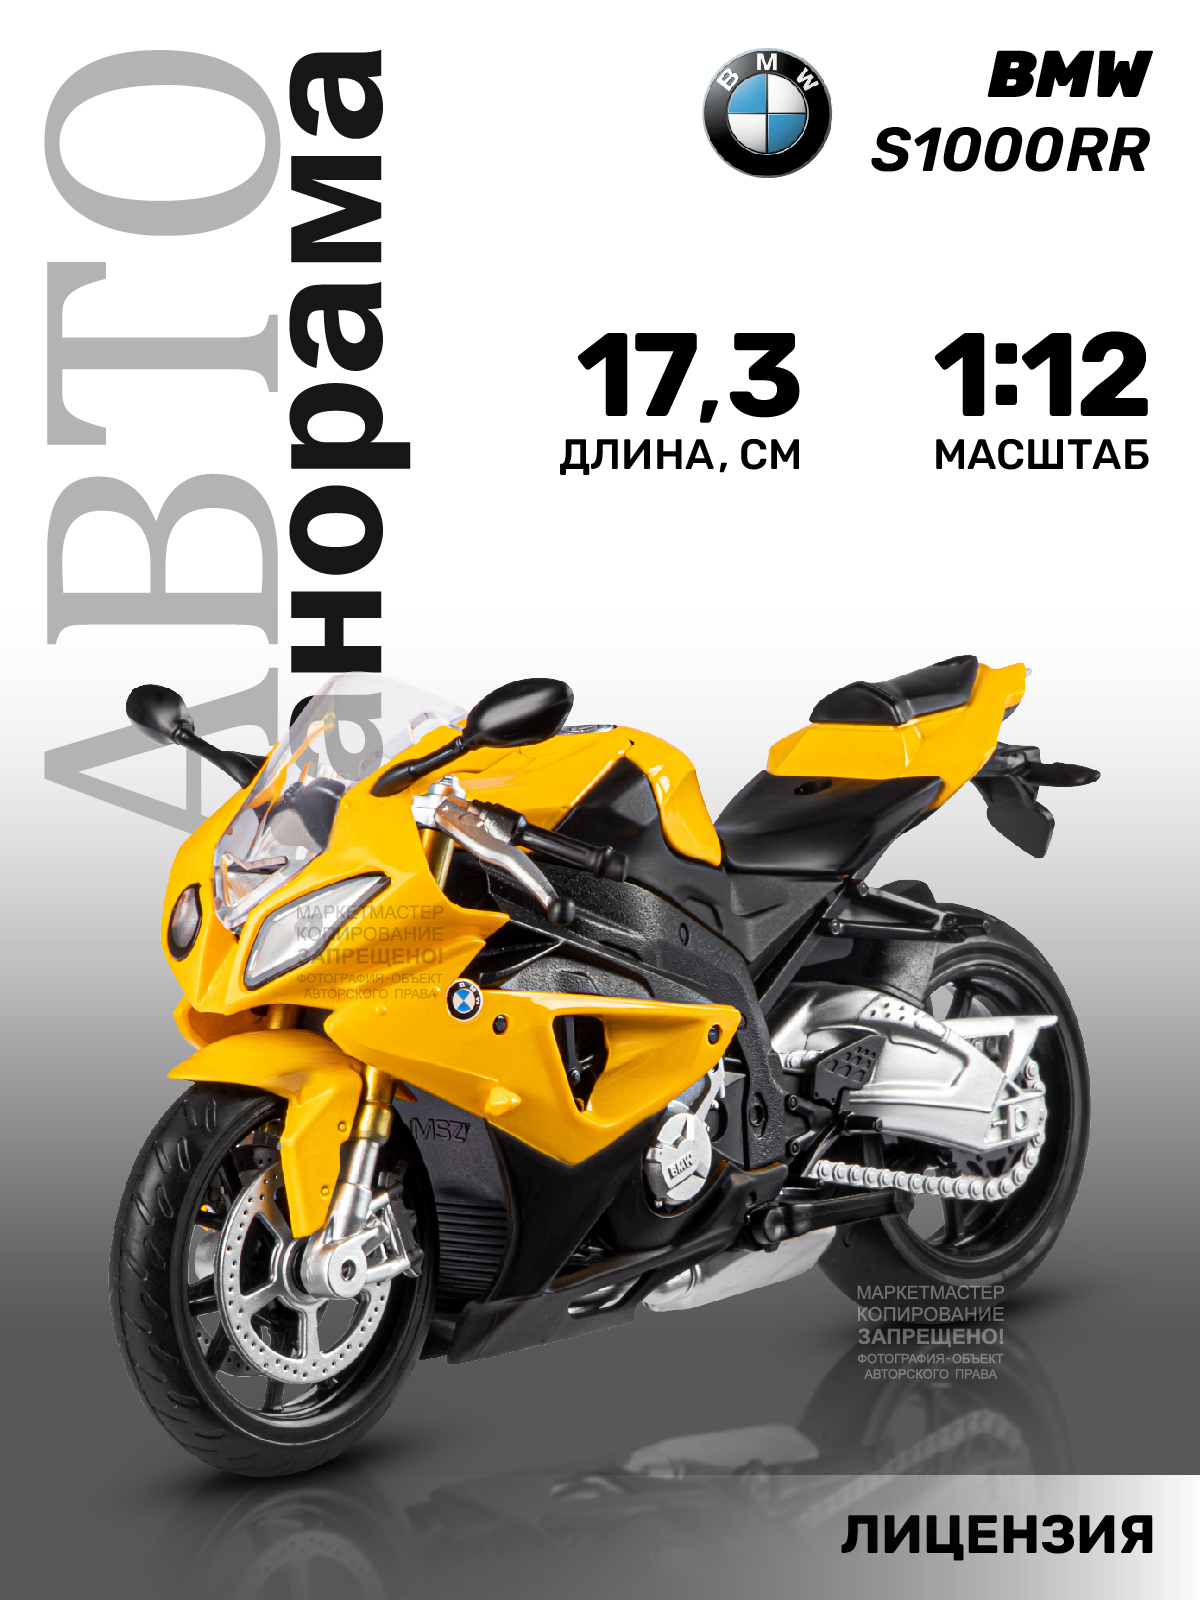 Мотоцикл металлический ТМ Автопанорама, свободный ход колес, М1:12, JB1251606